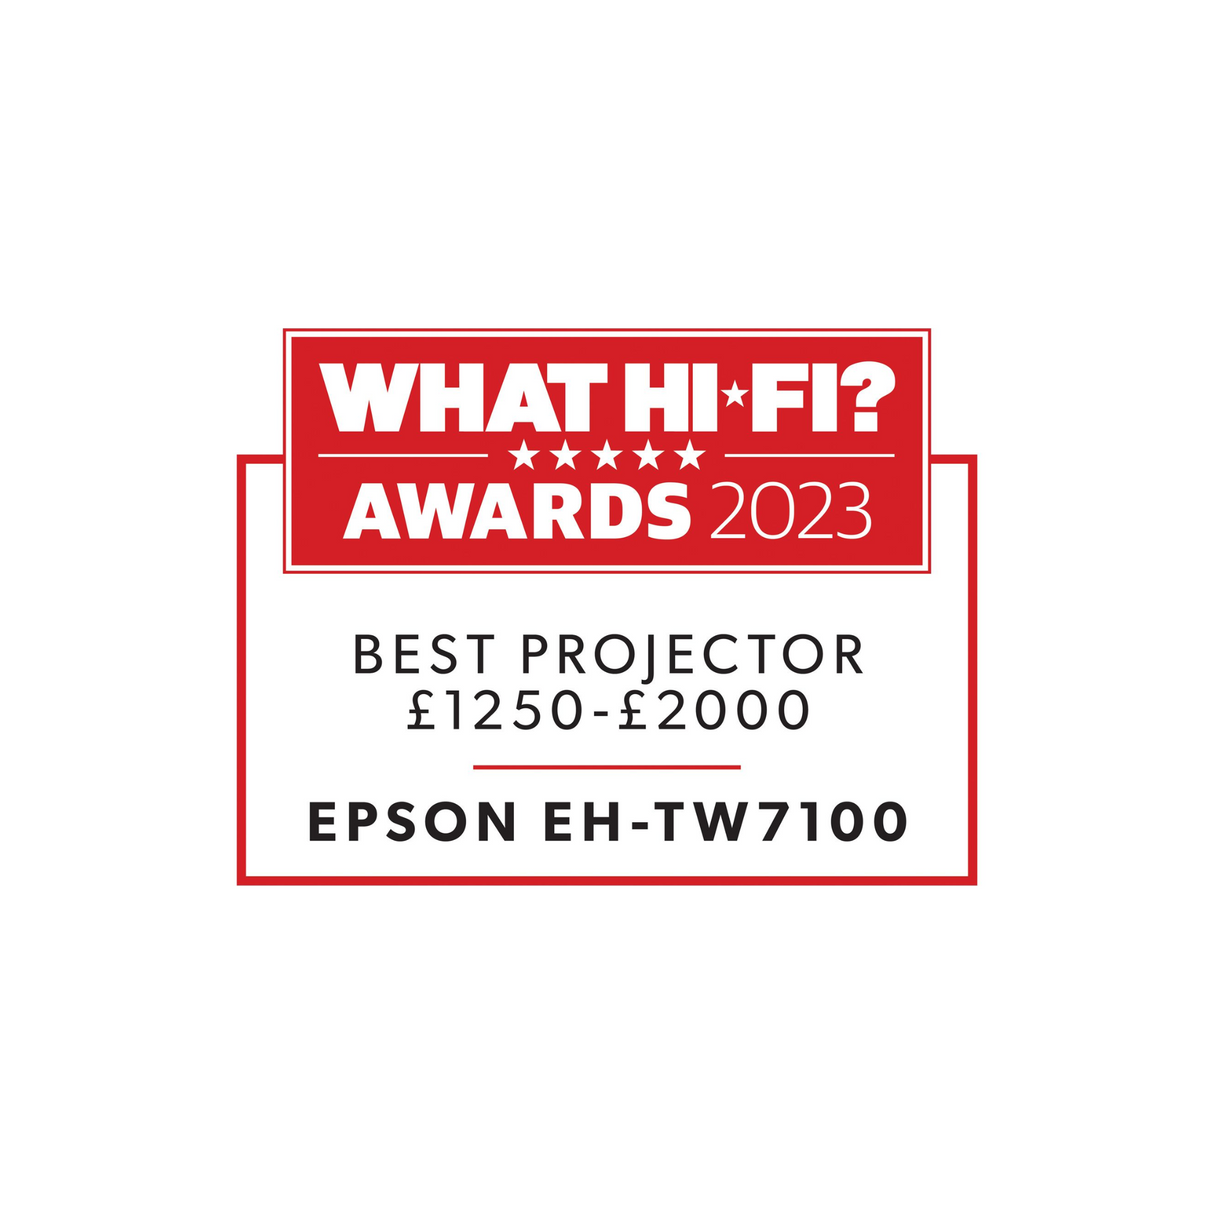 EPSON EHTW7100 3LCD 4K Enhanced HDR Projector